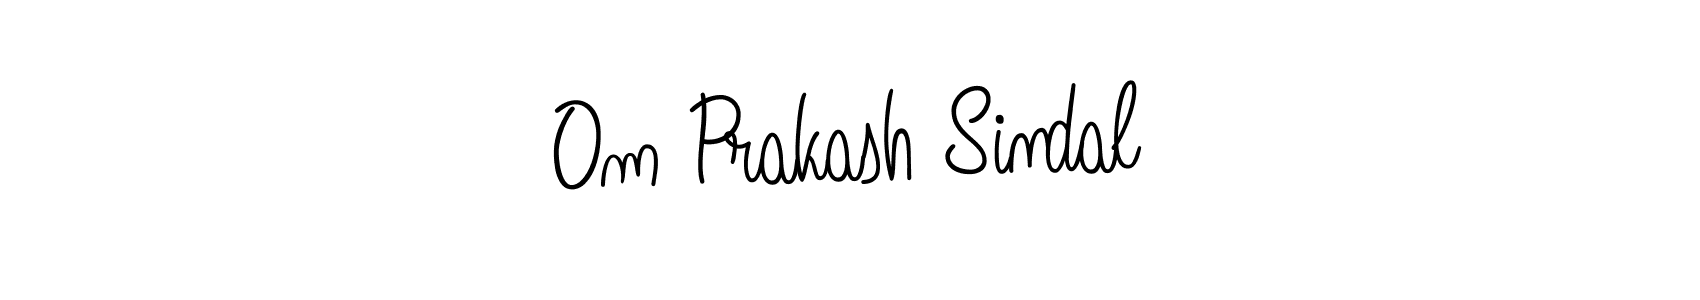 How to Draw Om Prakash Sindal signature style? Angelique-Rose-font-FFP is a latest design signature styles for name Om Prakash Sindal. Om Prakash Sindal signature style 5 images and pictures png